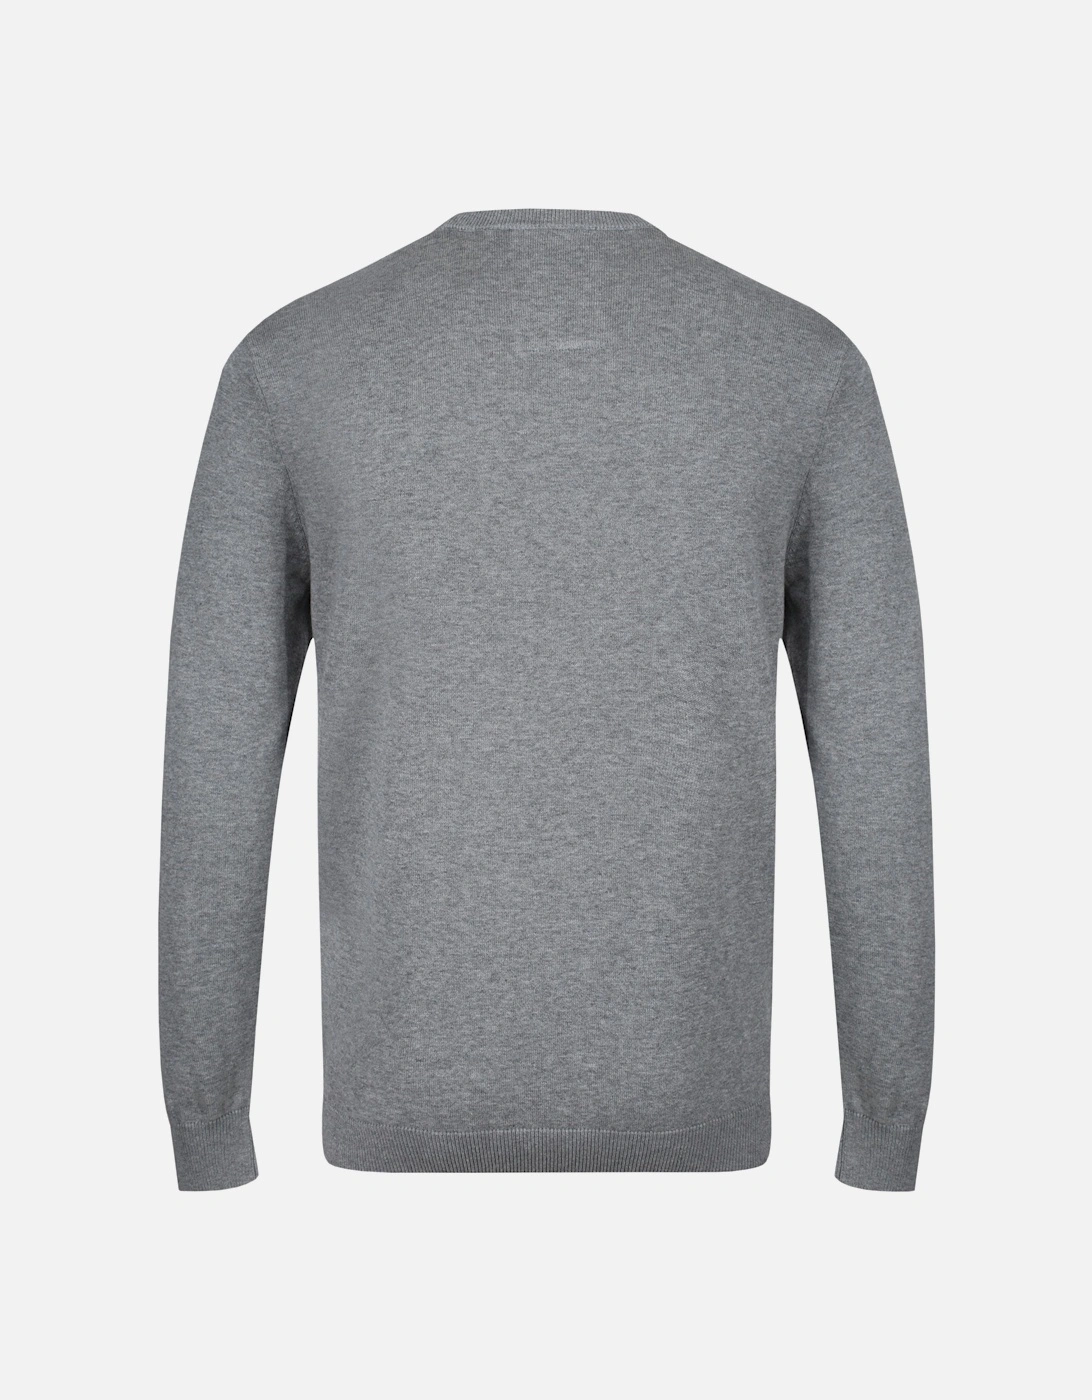 Radon Knit Crew Neck Sweatshirt | Mid Marl Grey